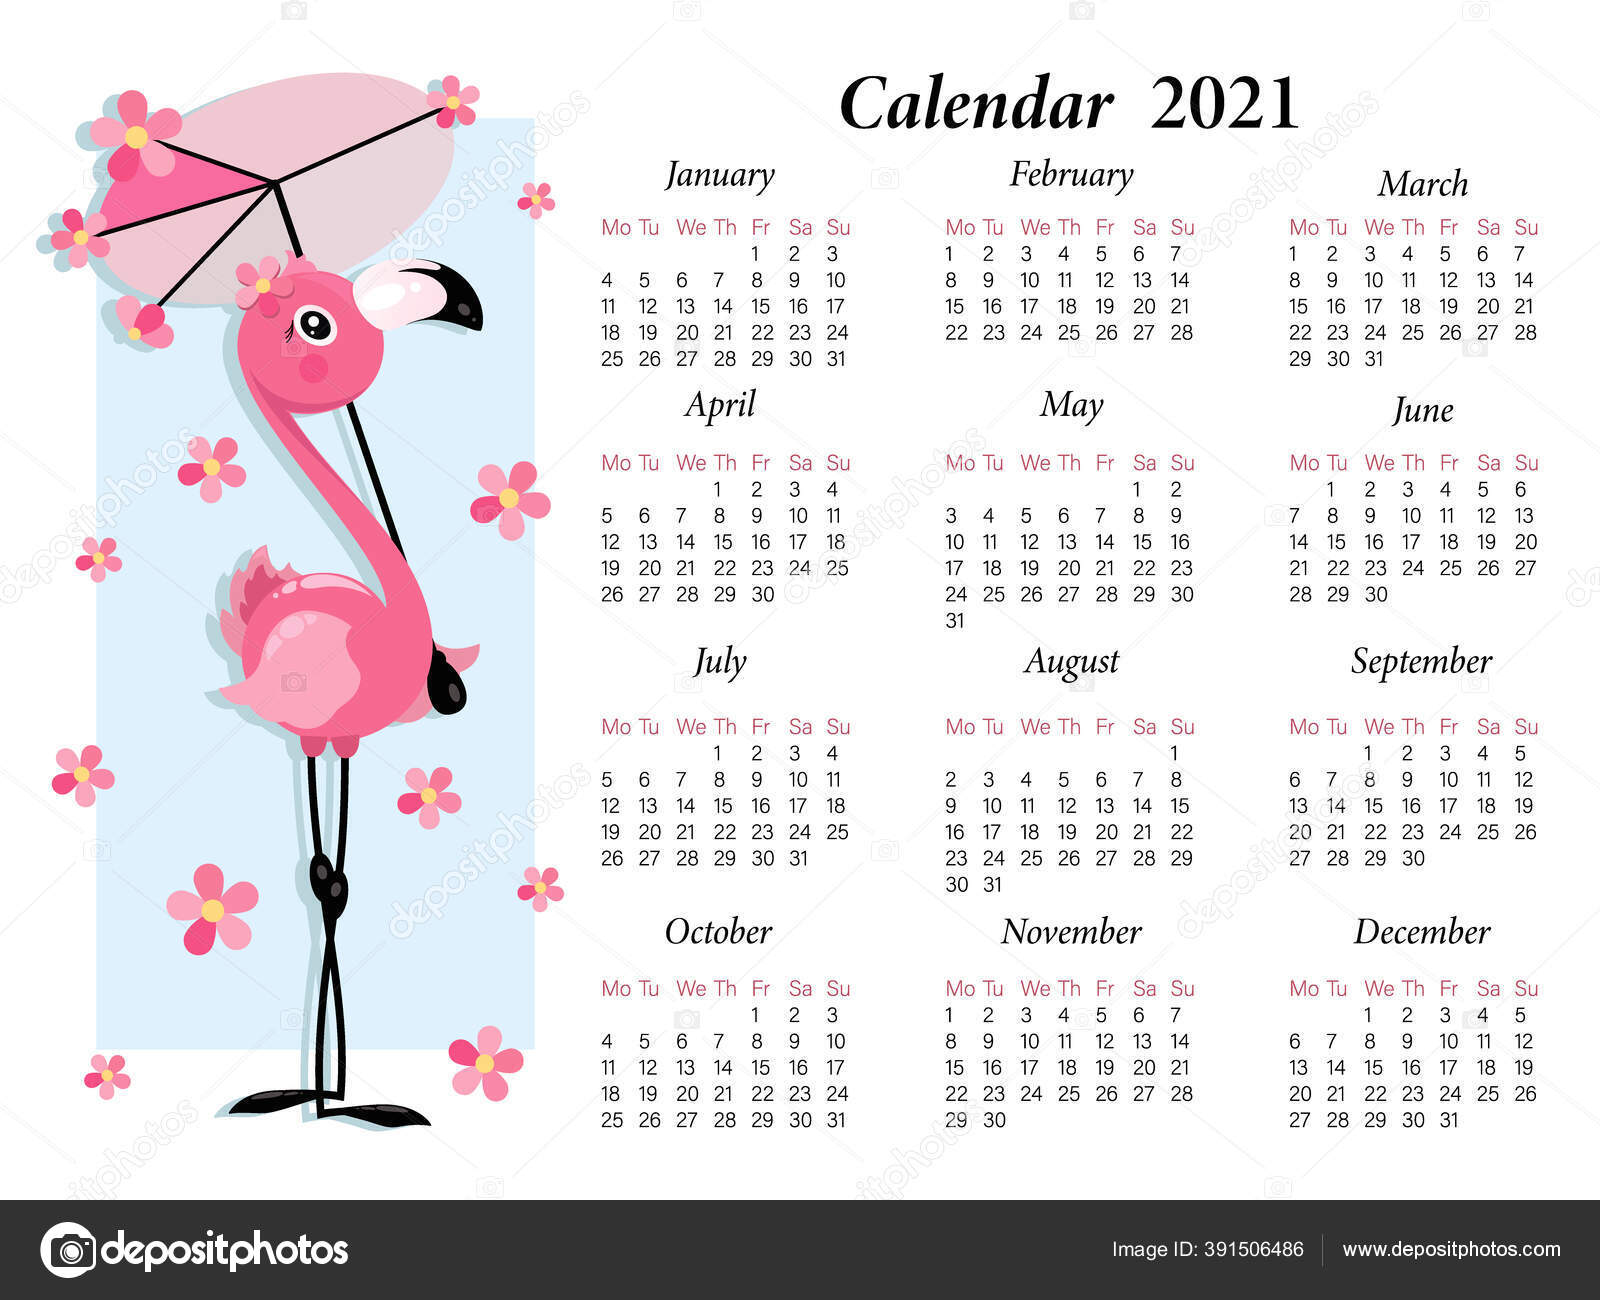 kalender May 2021: kalender 2021 cartoon